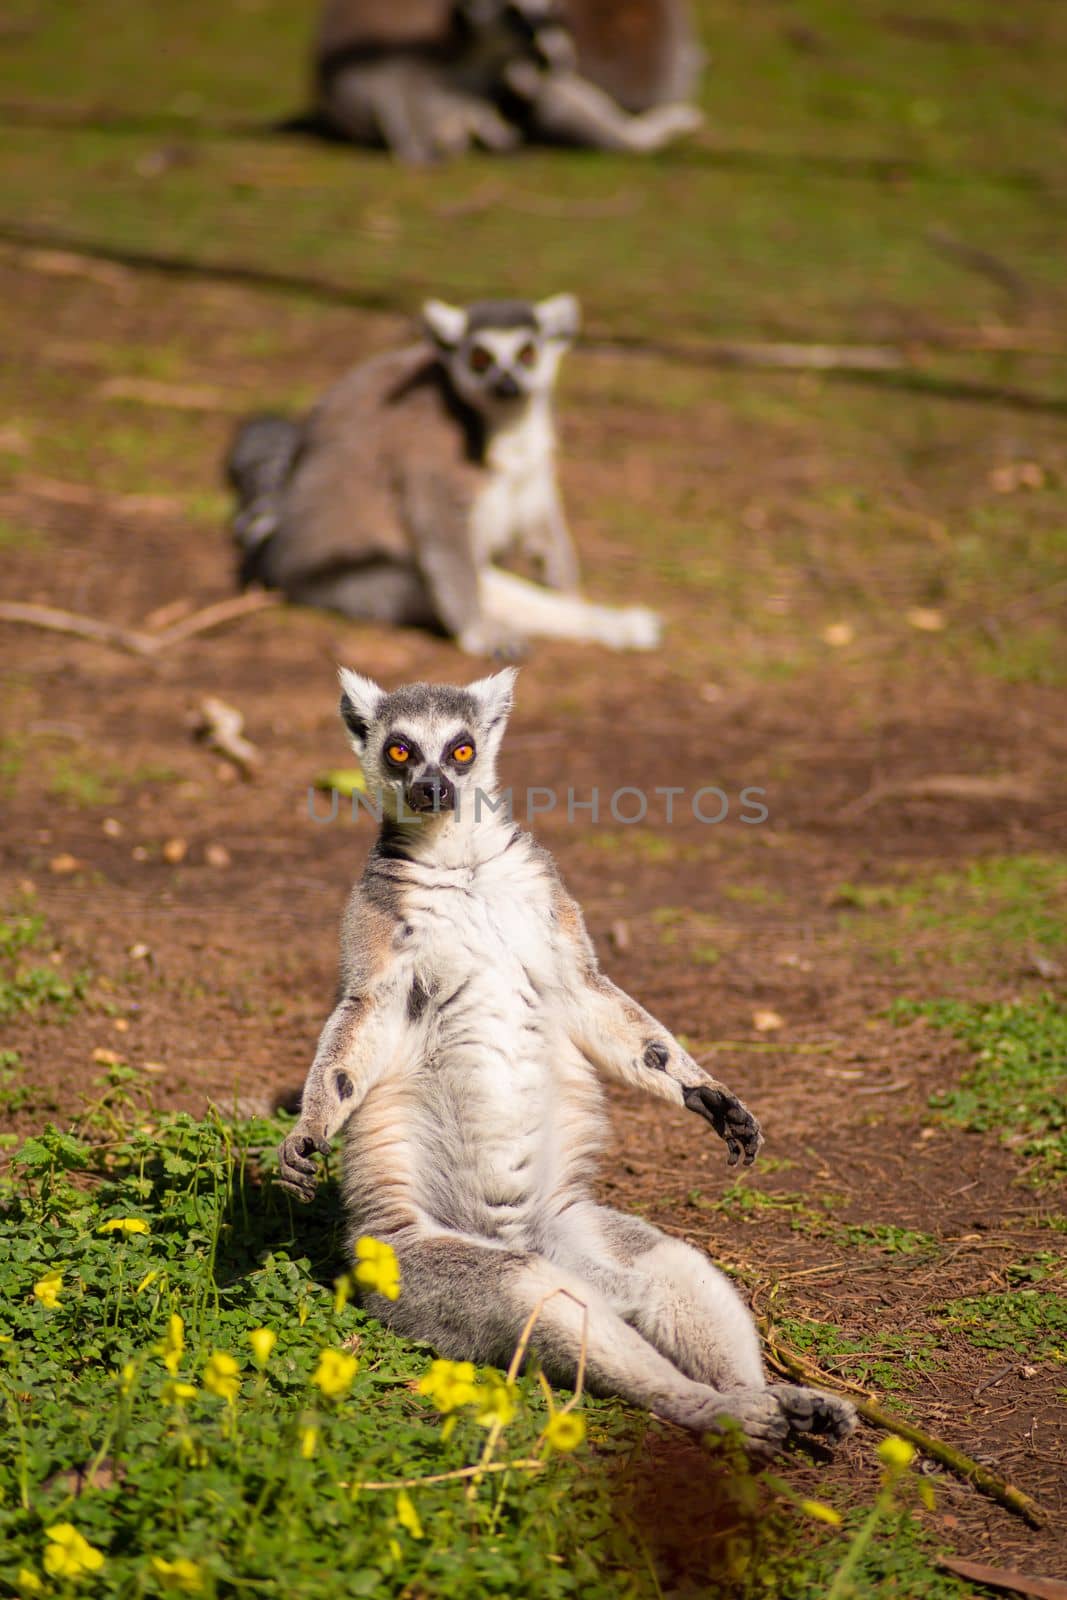 Lemur on the lawn basking in the sun.